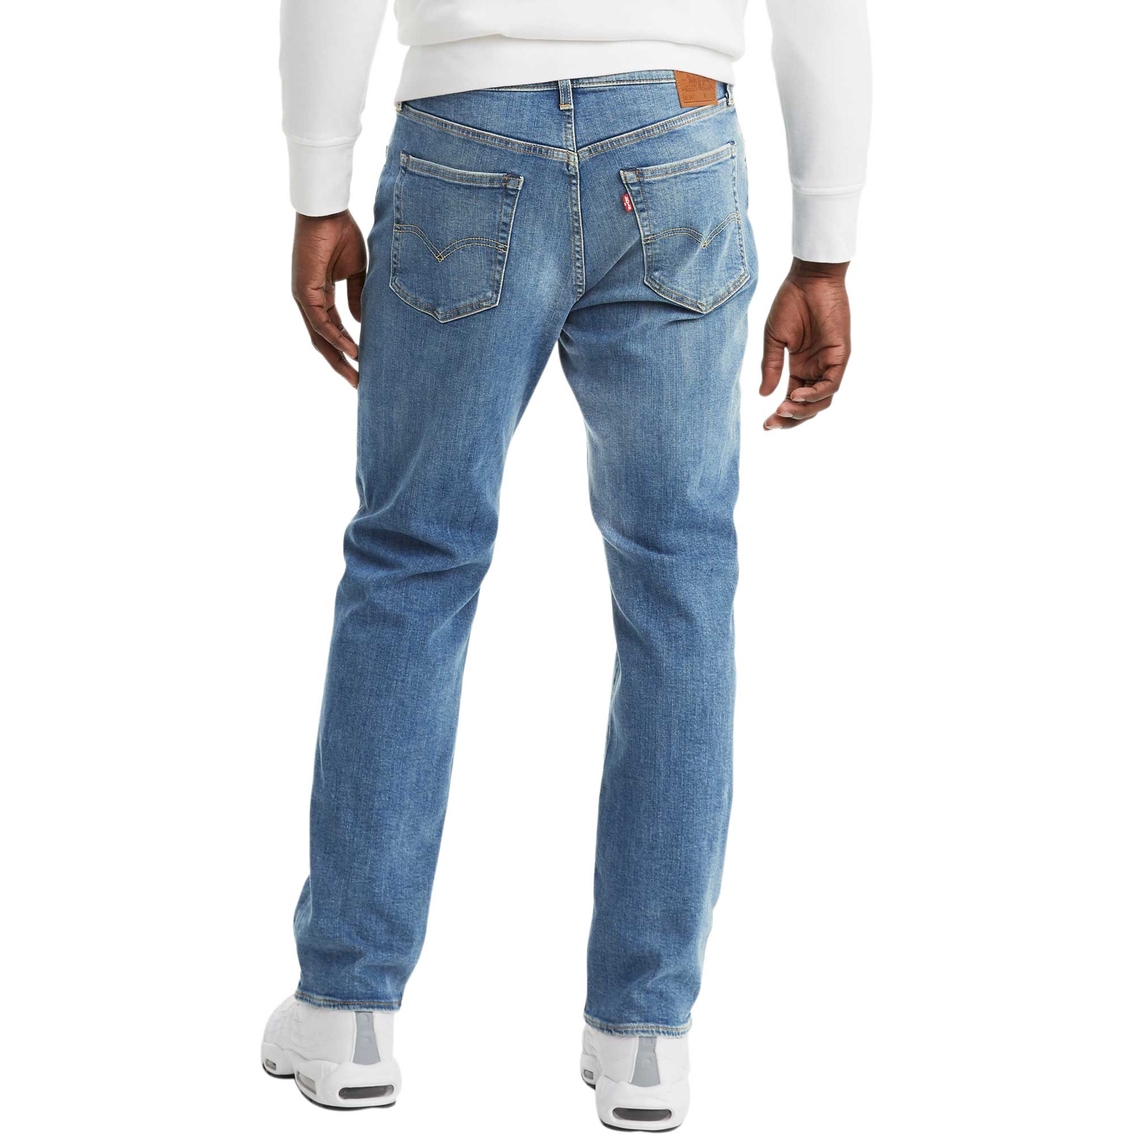 Levi's 541 Athletic Taper Flex Jeans - Image 2 of 3